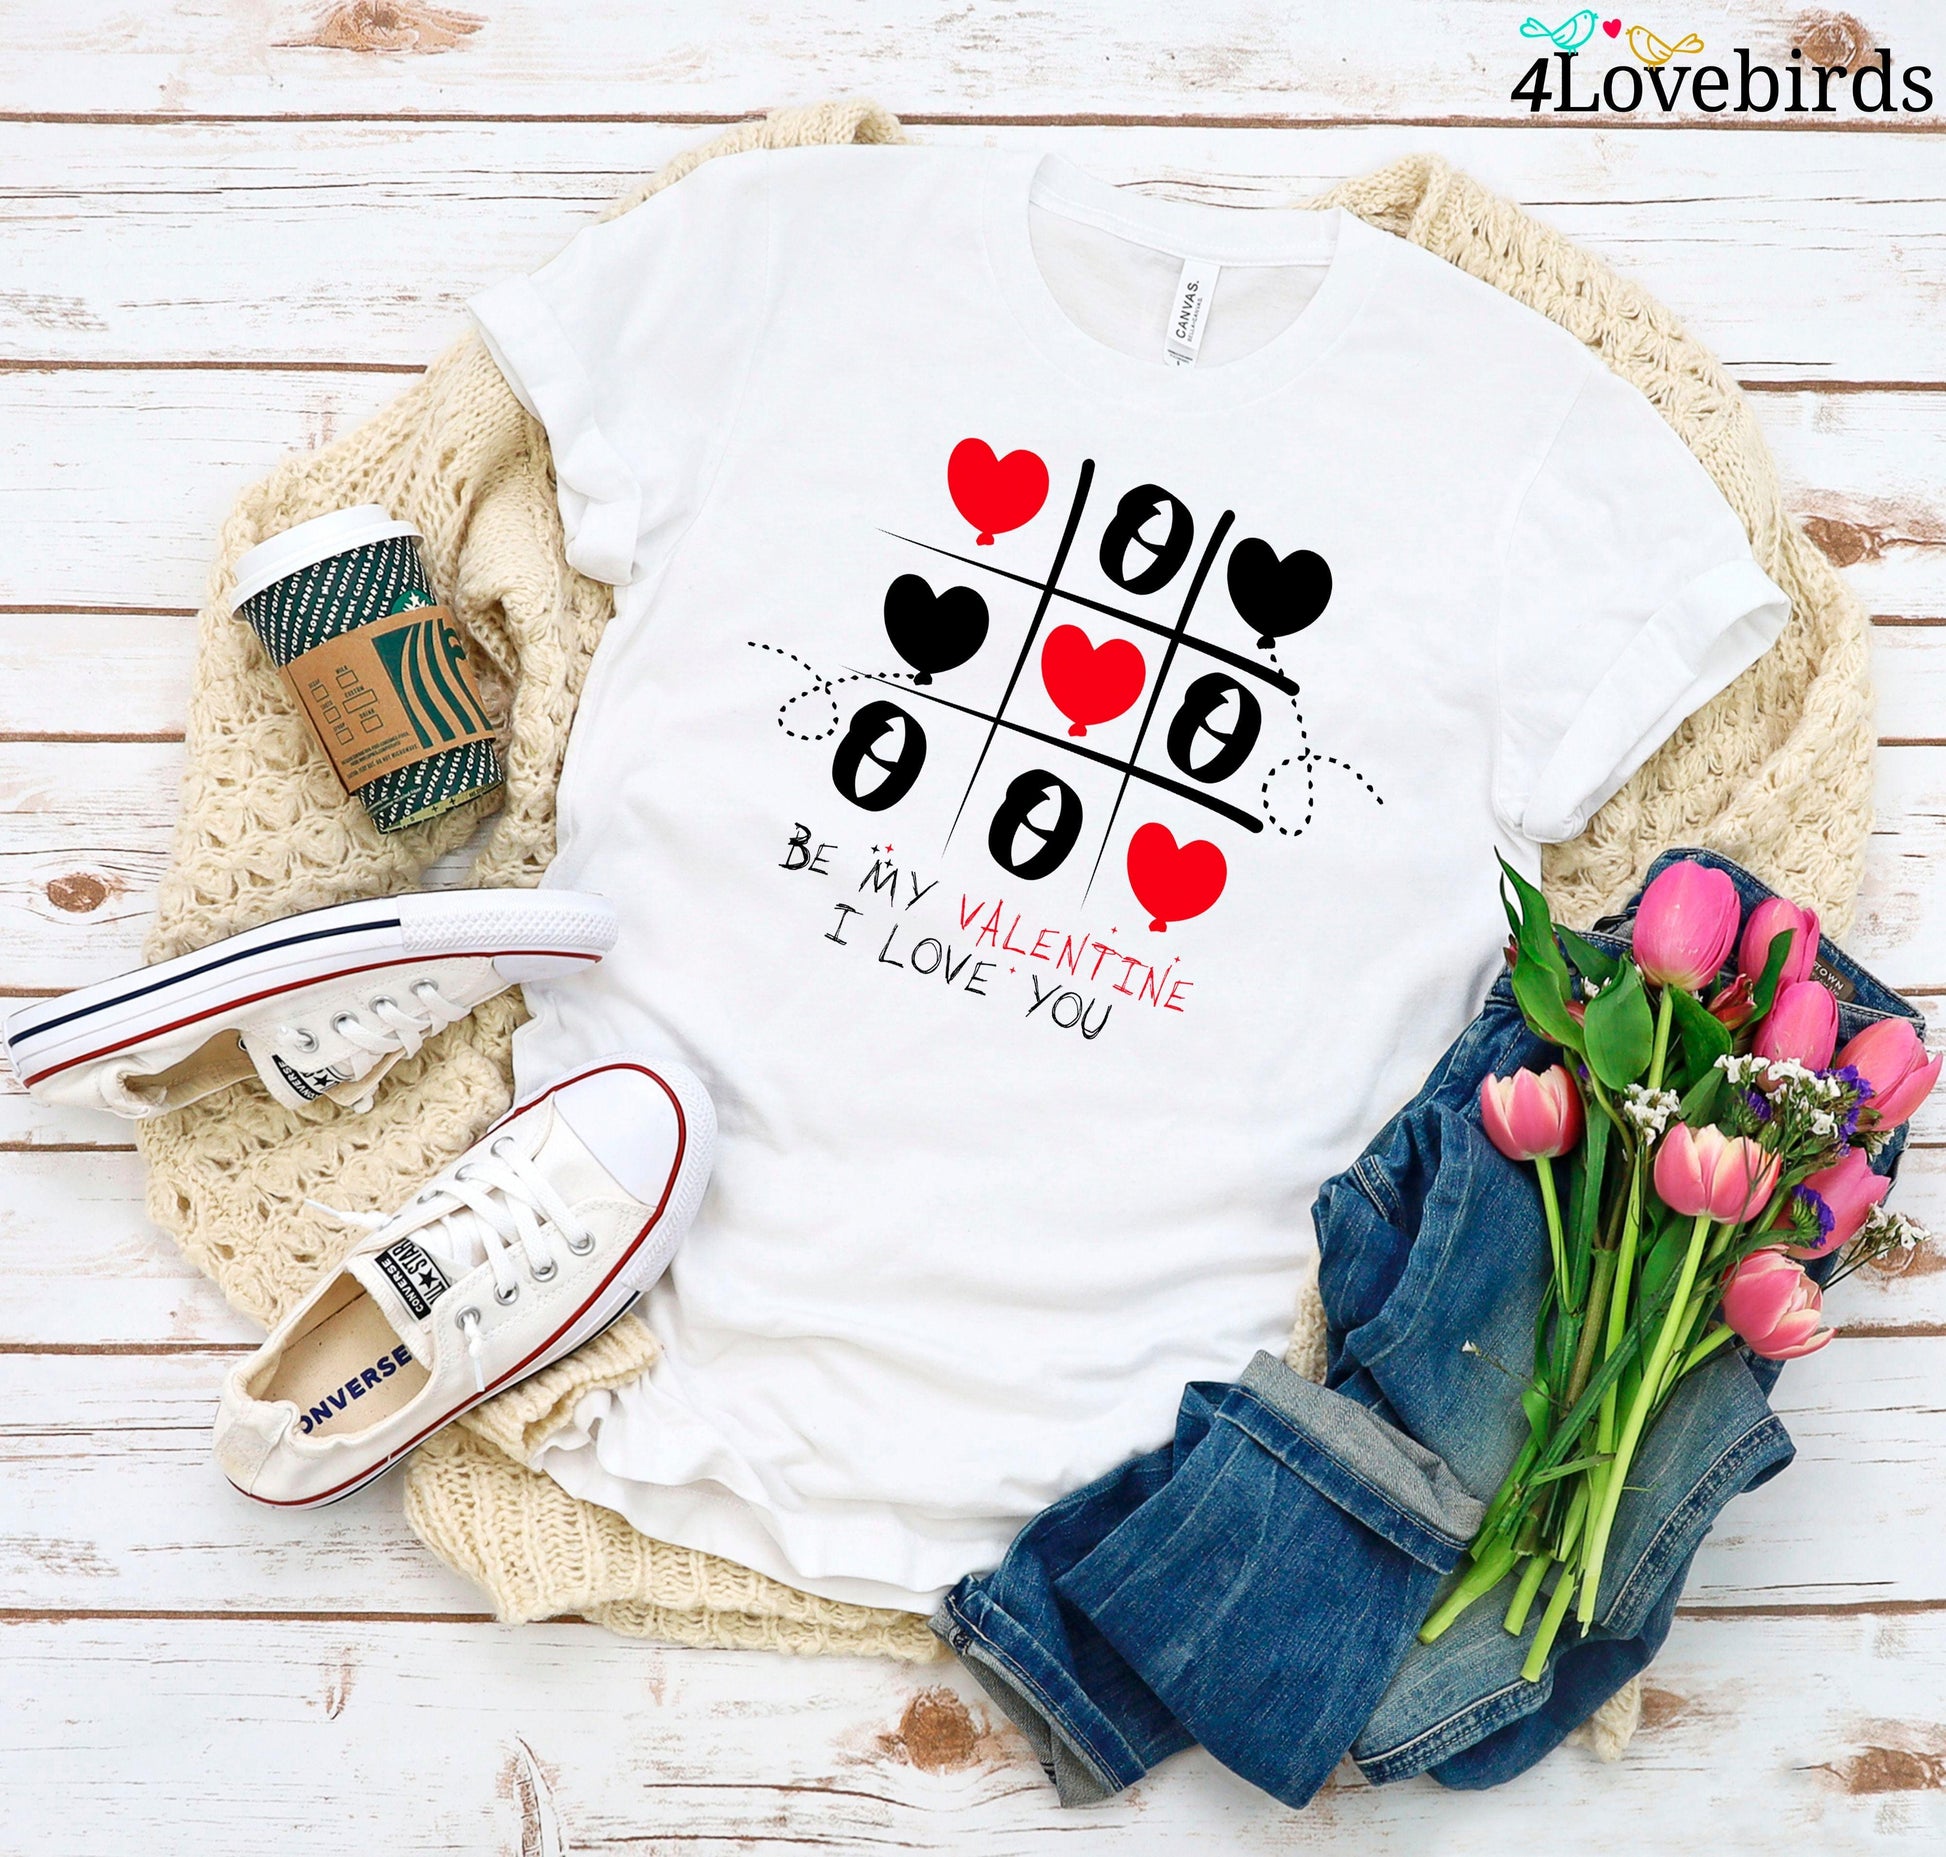 Love Sweatshirt, Xoxo Crewneck, Valentines Day Shirt For Women, Cute  Valentines Day Gift for Her